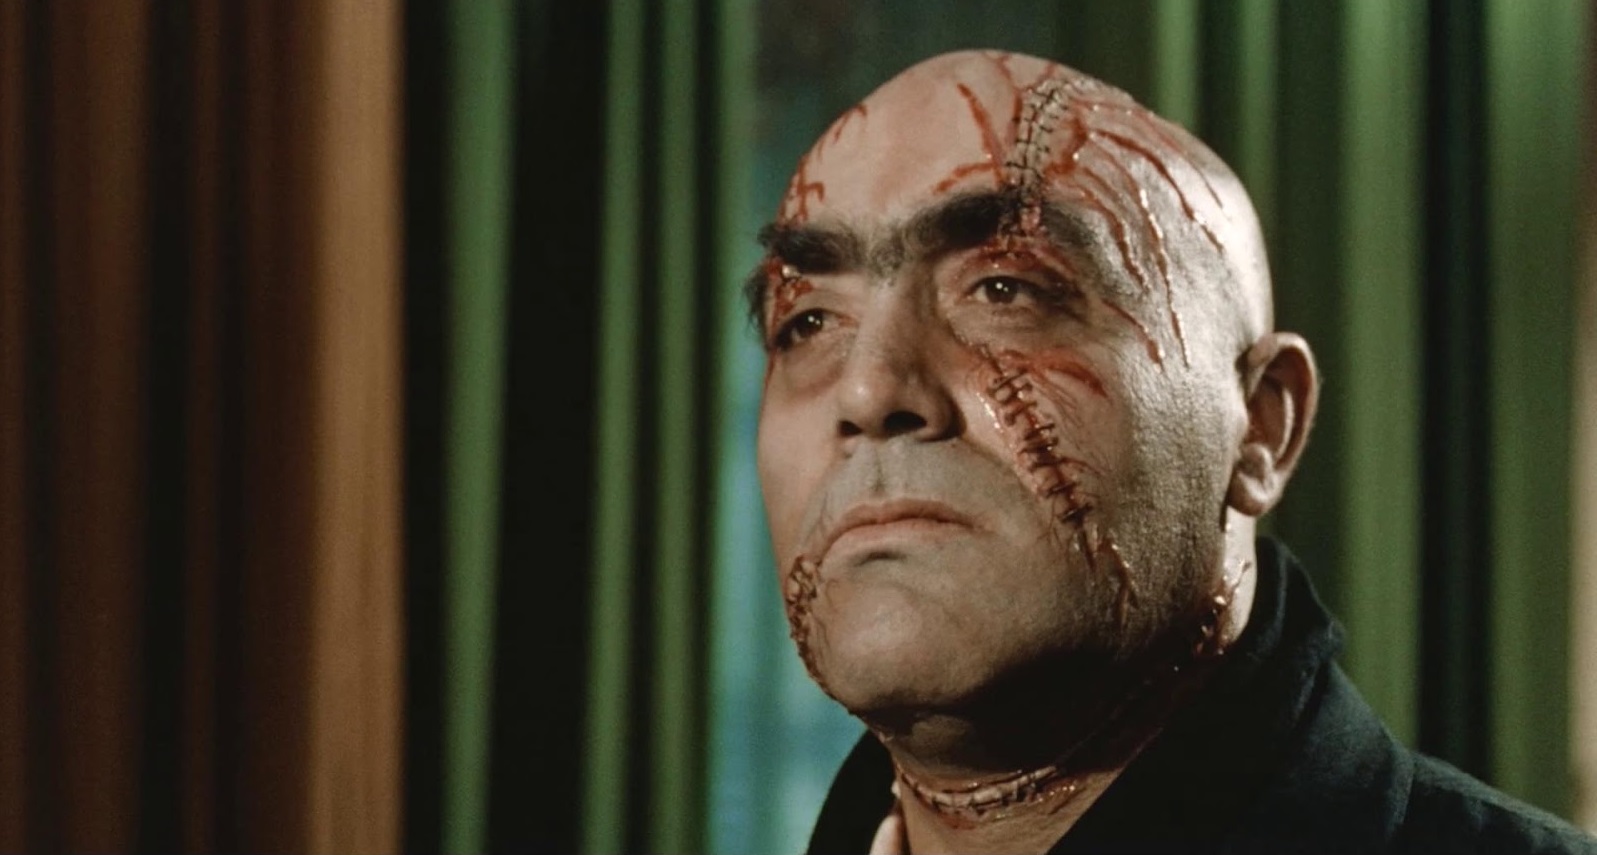 Xiro Papas as Mosaic the Frankenstein monster in Frankenstein '80 (1972)